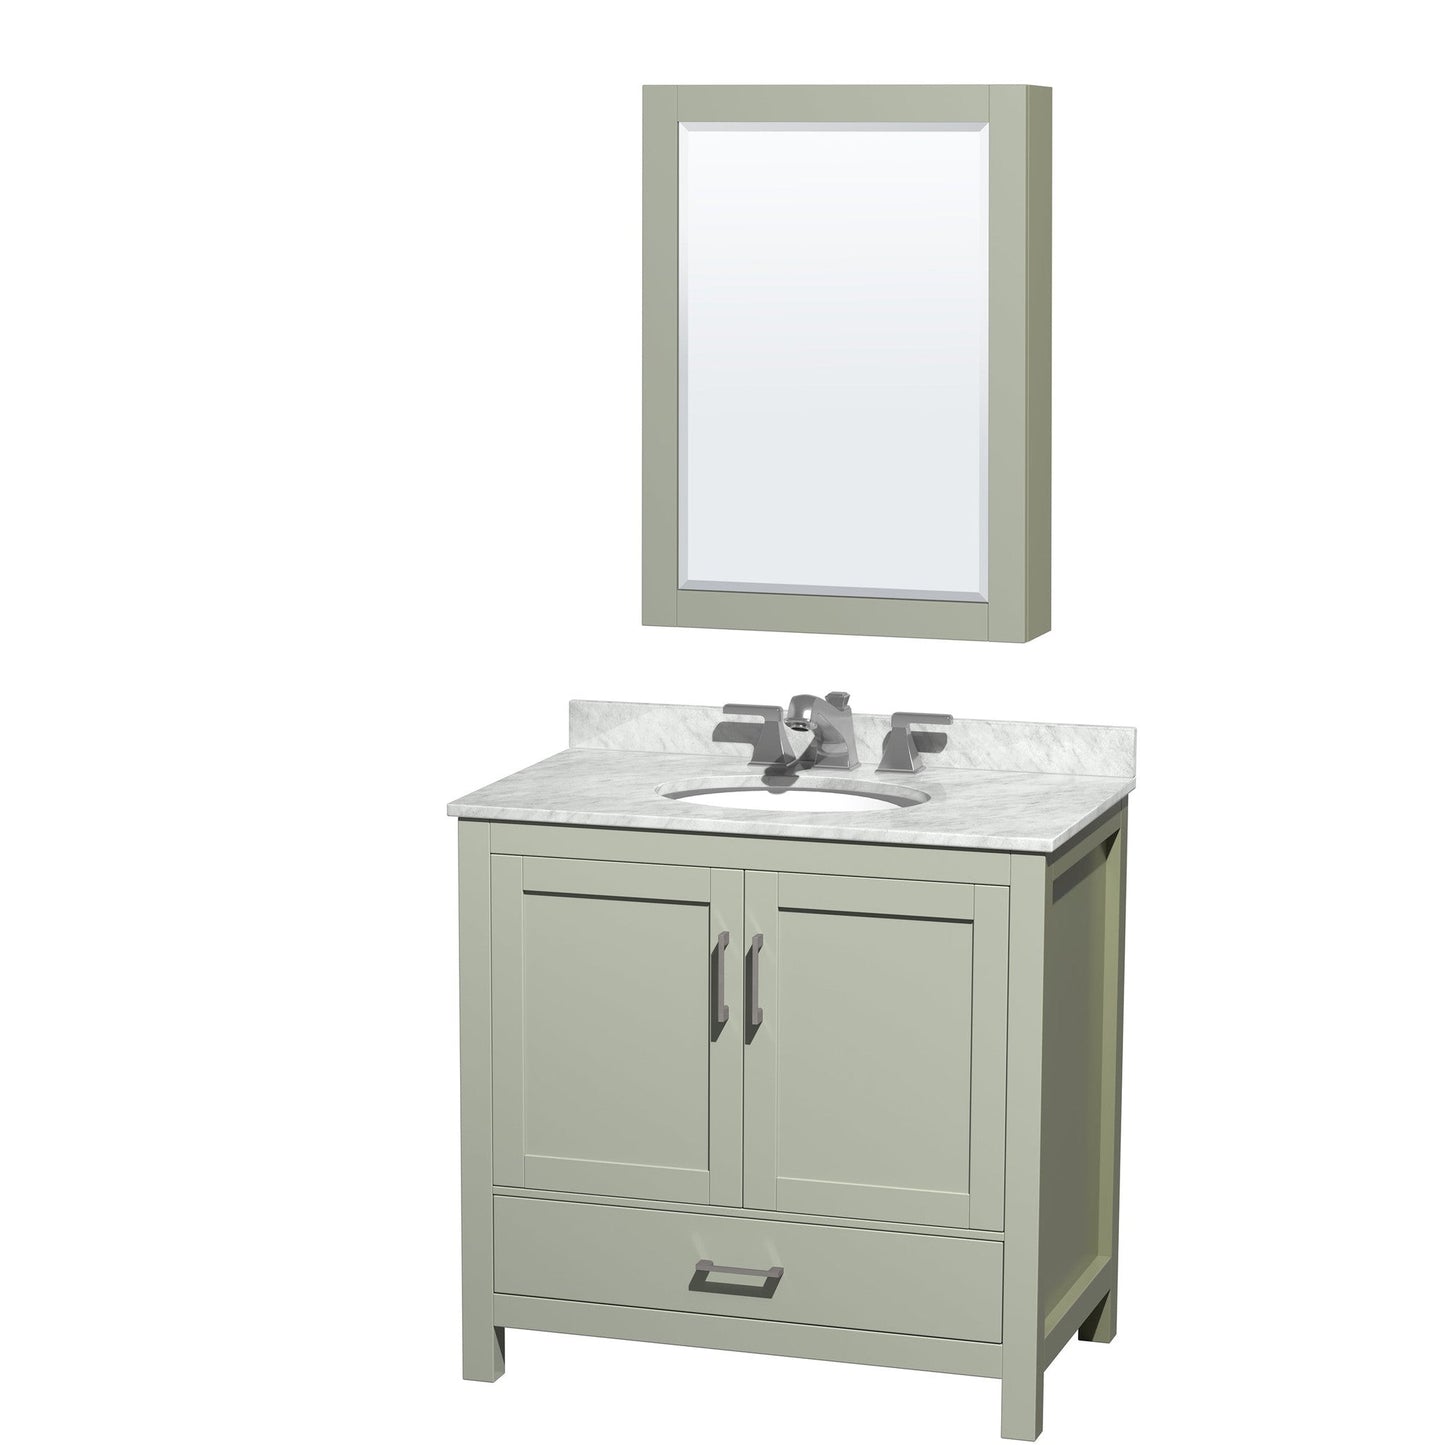 Sheffield 36" Single Bathroom Vanity in Light Green, White Carrara Marble Countertop, Undermount Oval Sink, Brushed Nickel Trim, Medicine Cabinet